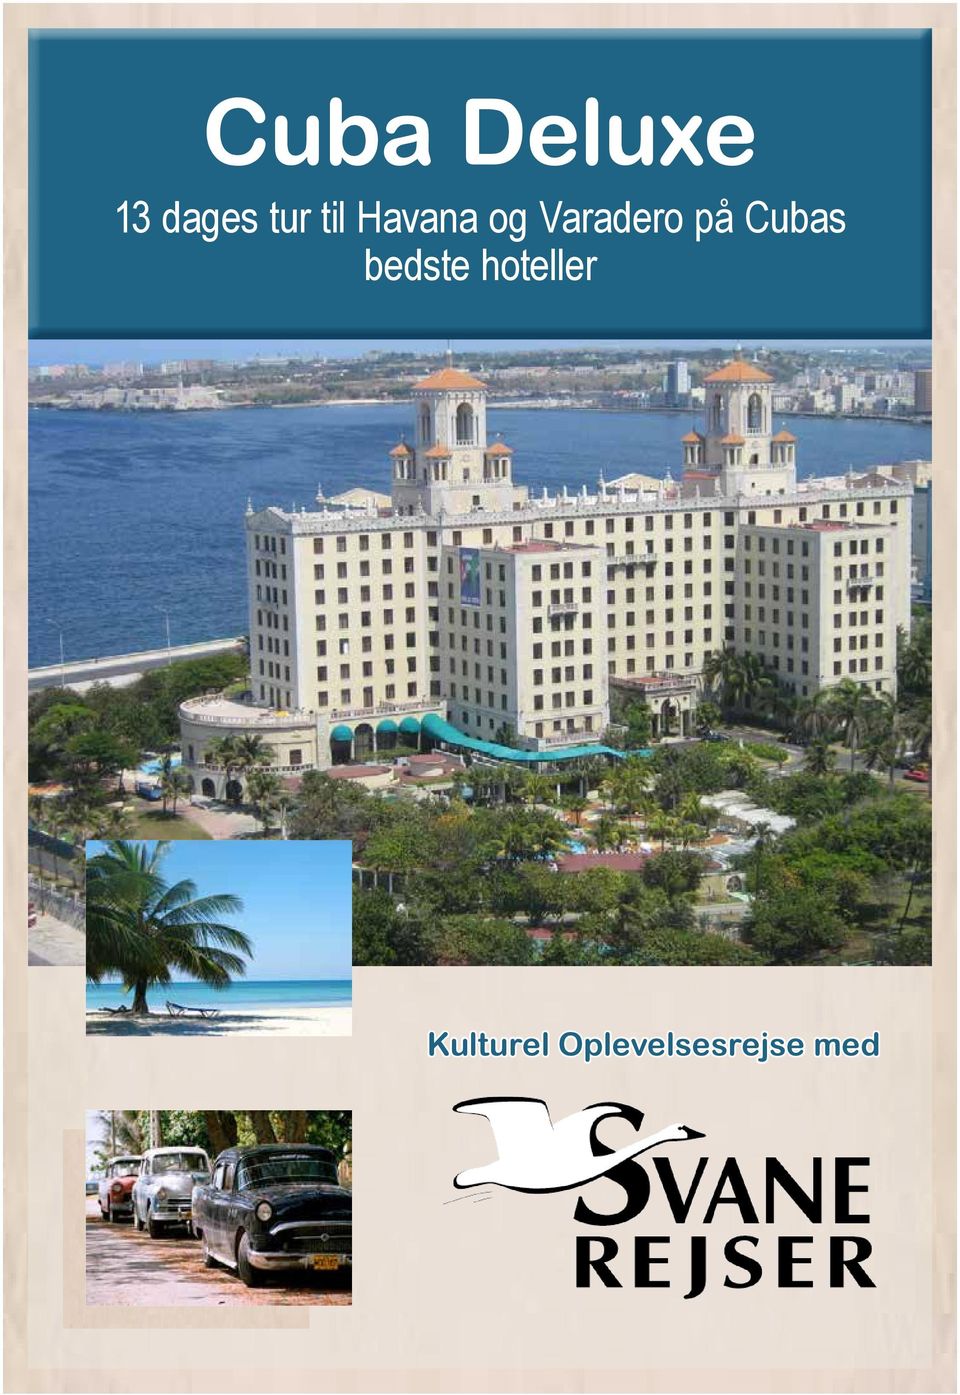 Cubas bedste hoteller